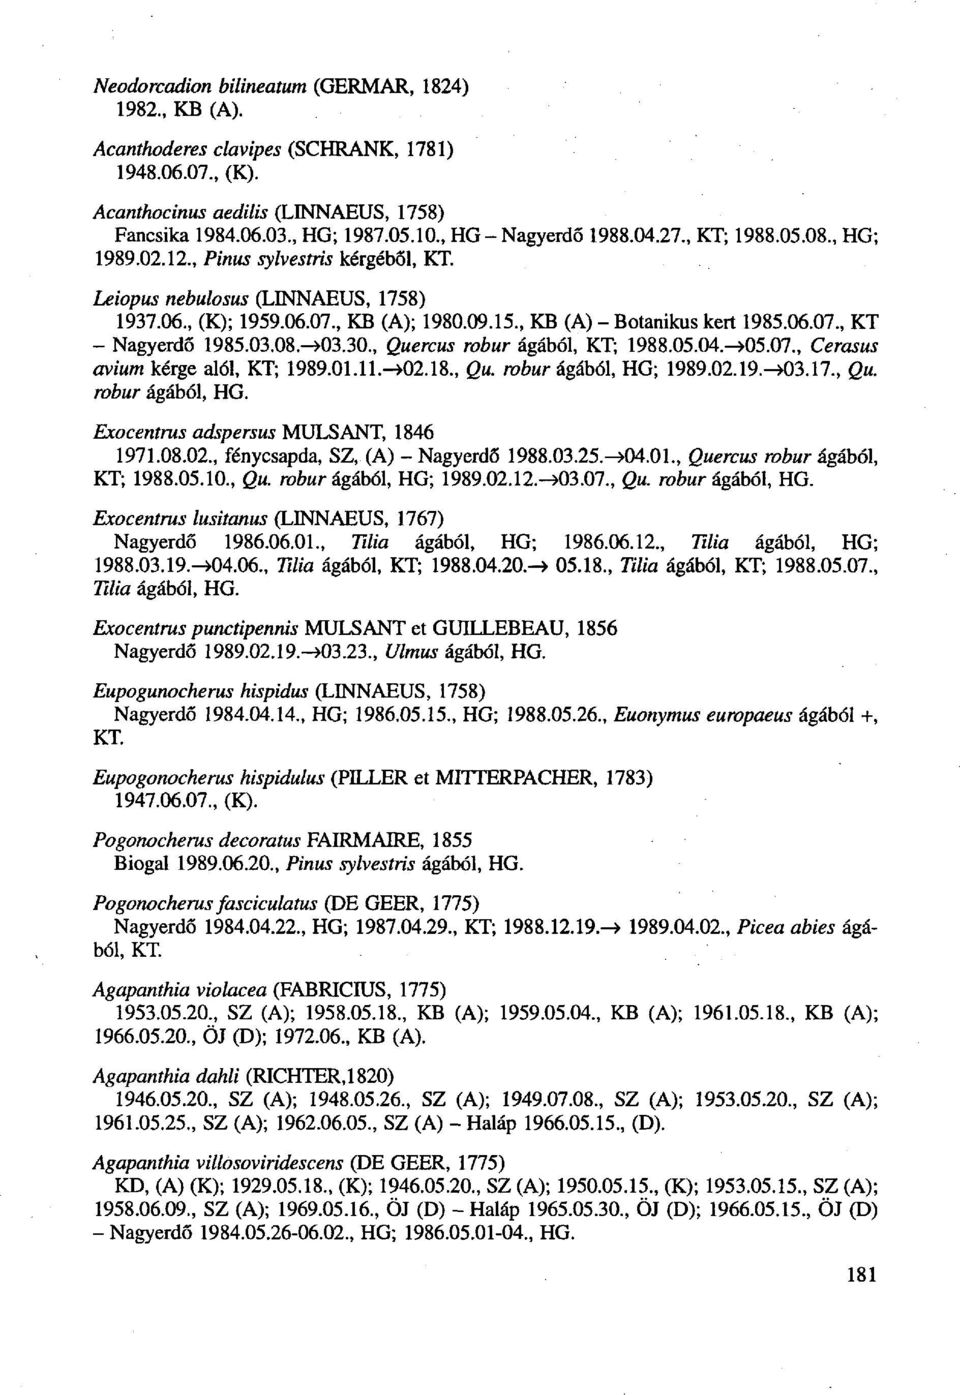 , KB (A) - Botanikus kert 1985.06.07., KT - Nagyerdő 1985.03.08.->03.30., Quercus robur ágából, KT; 1988.05.04.^05.07., Cerasus avium kérge alól, KT; 1989.01.11.-^02.18., Qu. robur ágából, HG; 1989.